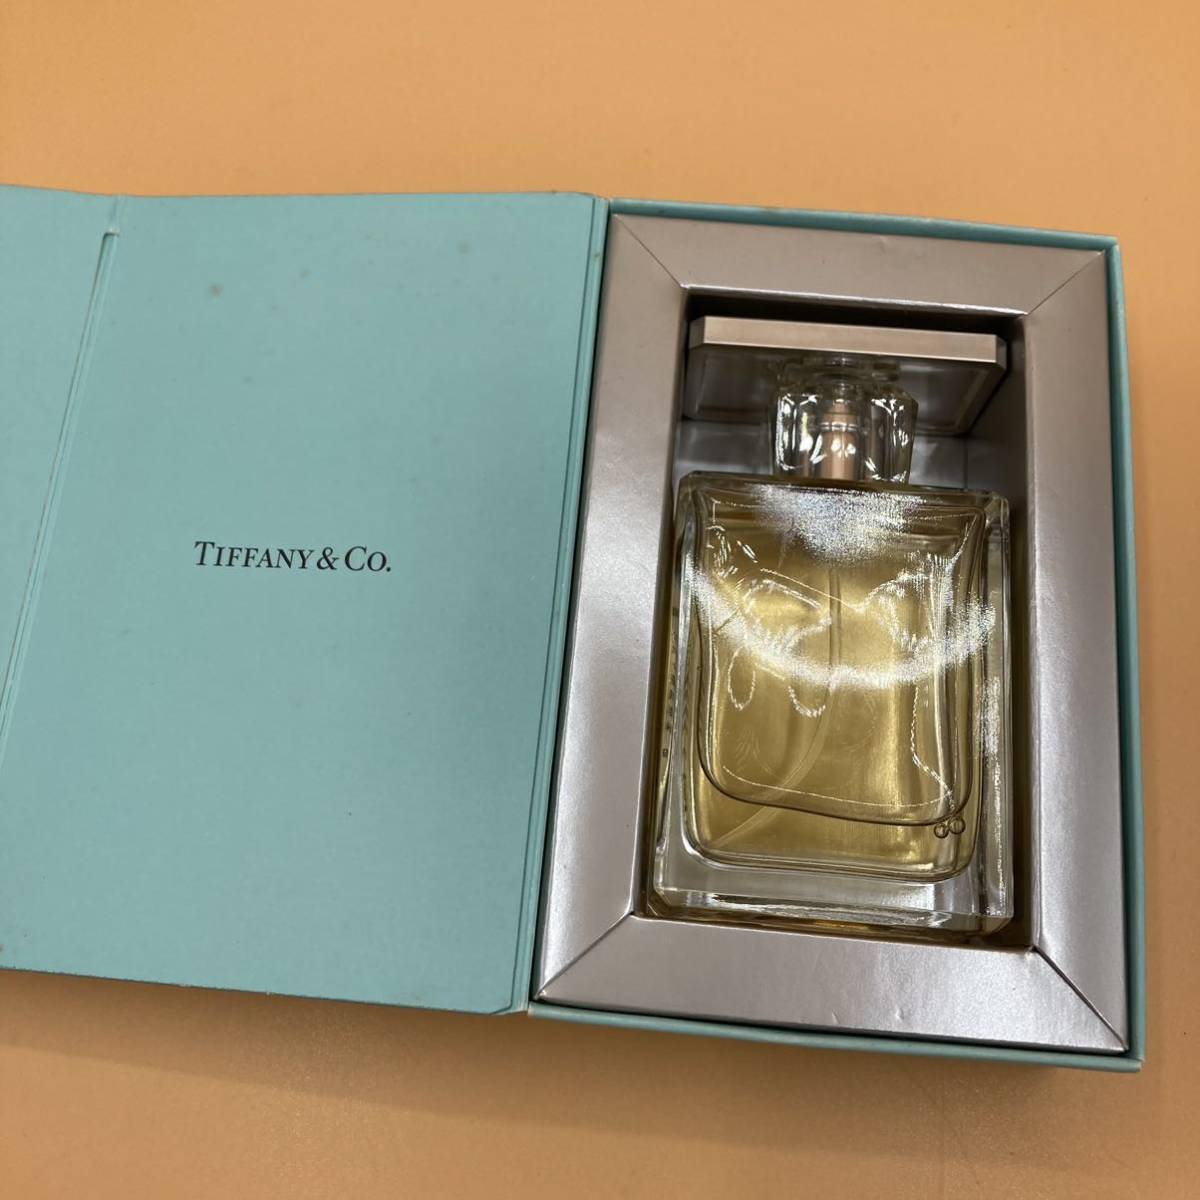 [2702][ almost new goods box attaching ] box damage have Tiffany perfume 50ml pure Tiffany o-do puff .-mTiffany&Co. fragrance cosmetics 